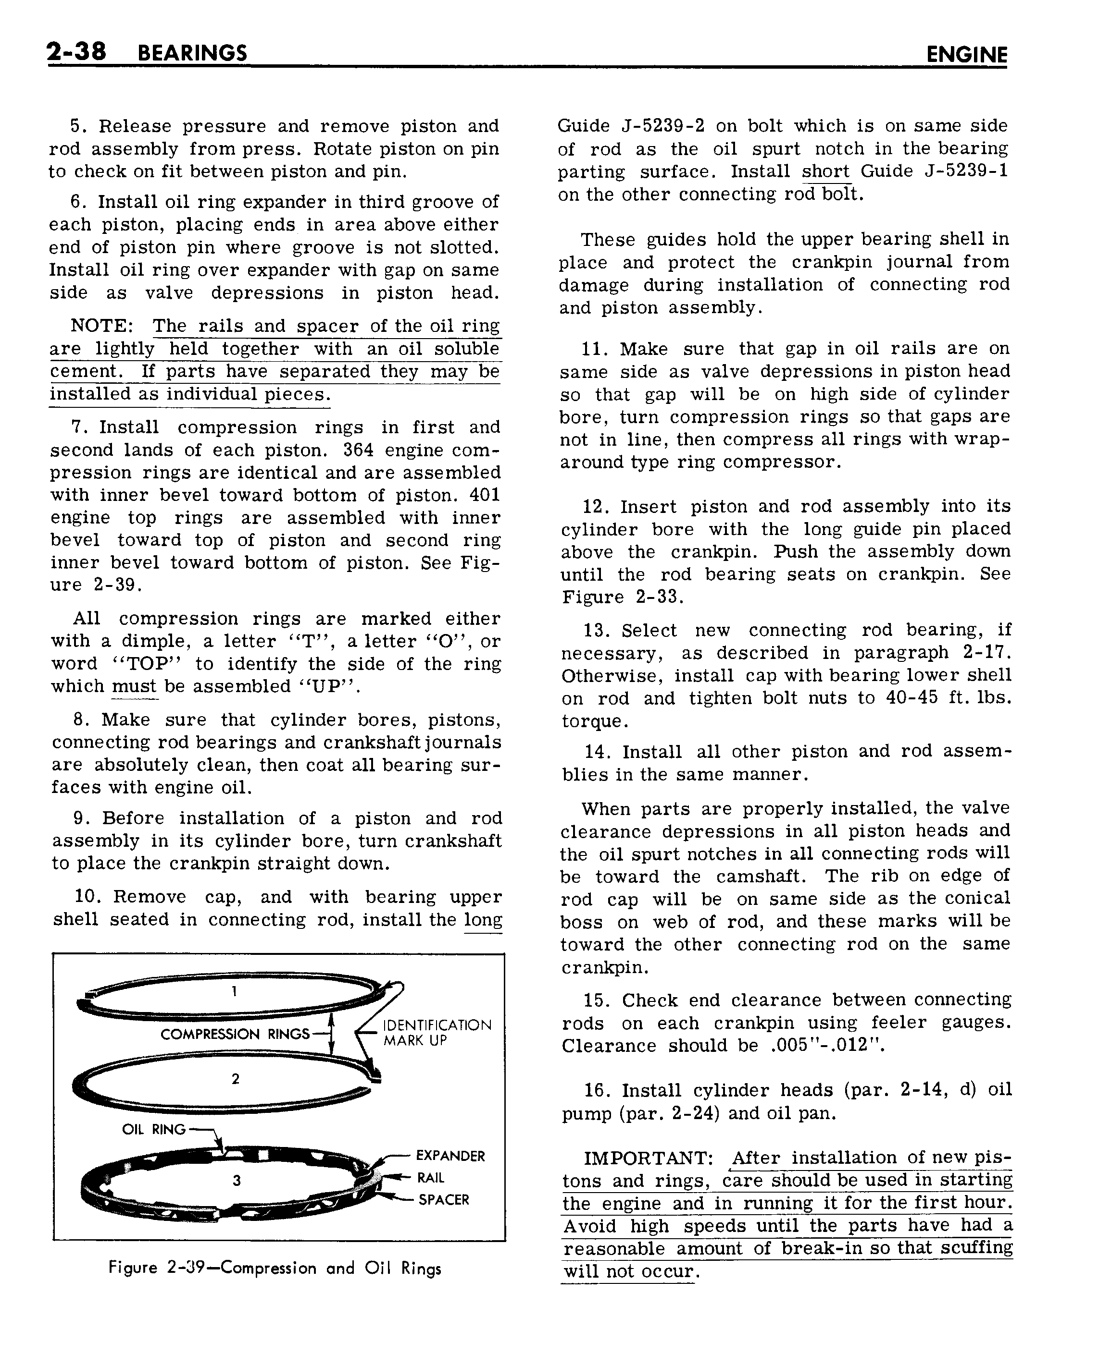 n_03 1961 Buick Shop Manual - Engine-038-038.jpg